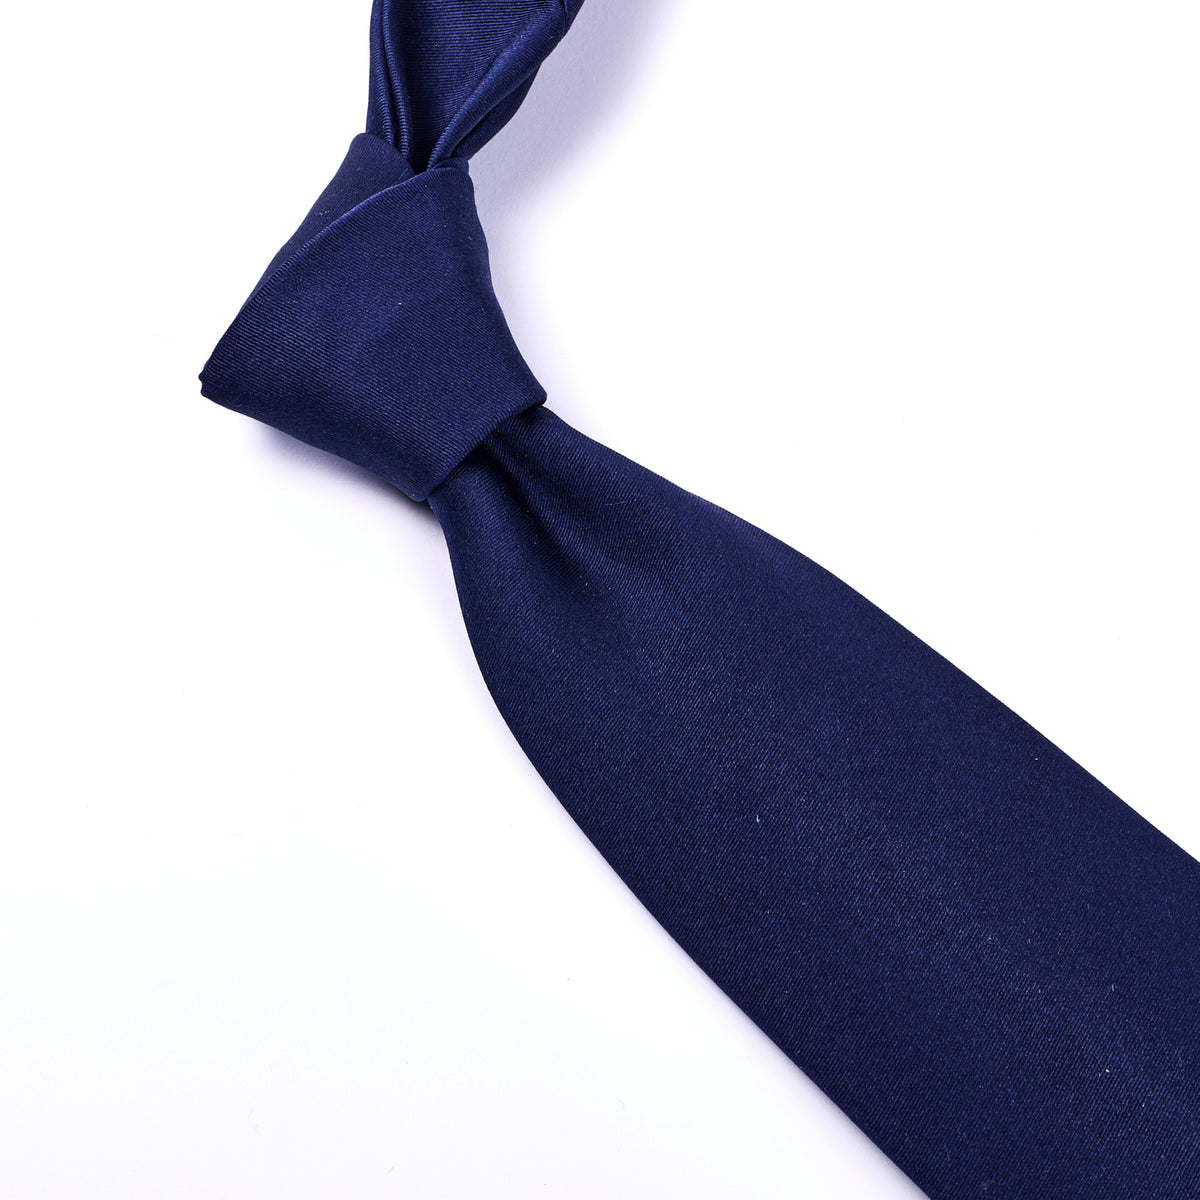 A handmade Sovereign Grade Midnight Blue Satin Tie from KirbyAllison.com on a white background.